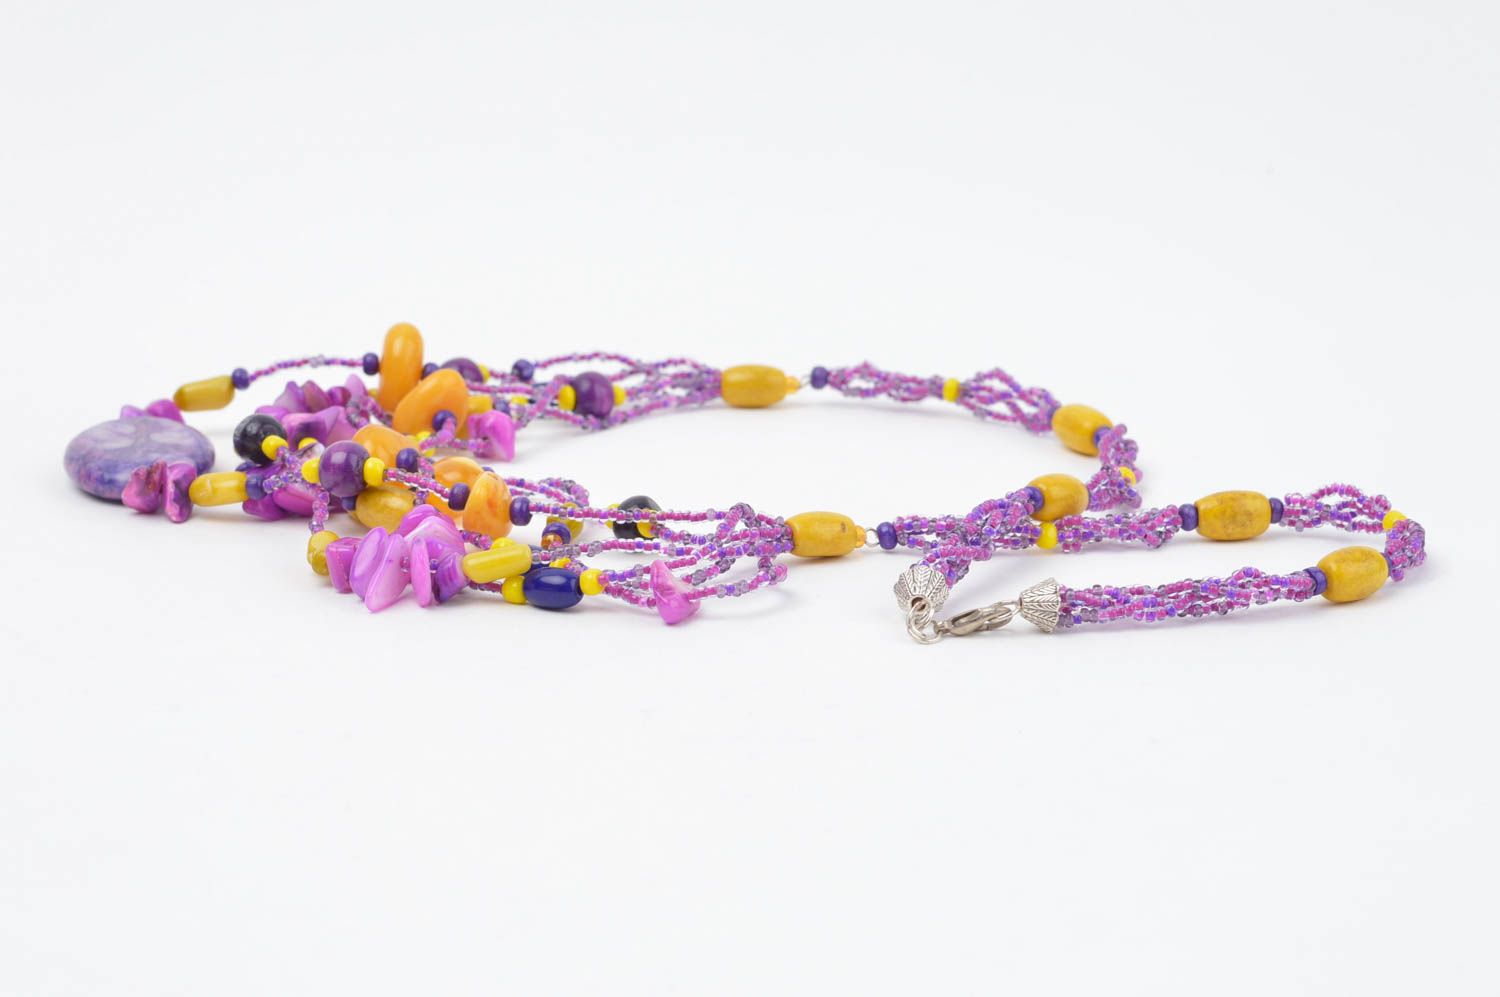 Handmade bead necklace for women gift ideas unusual accessory designer jewelry photo 2